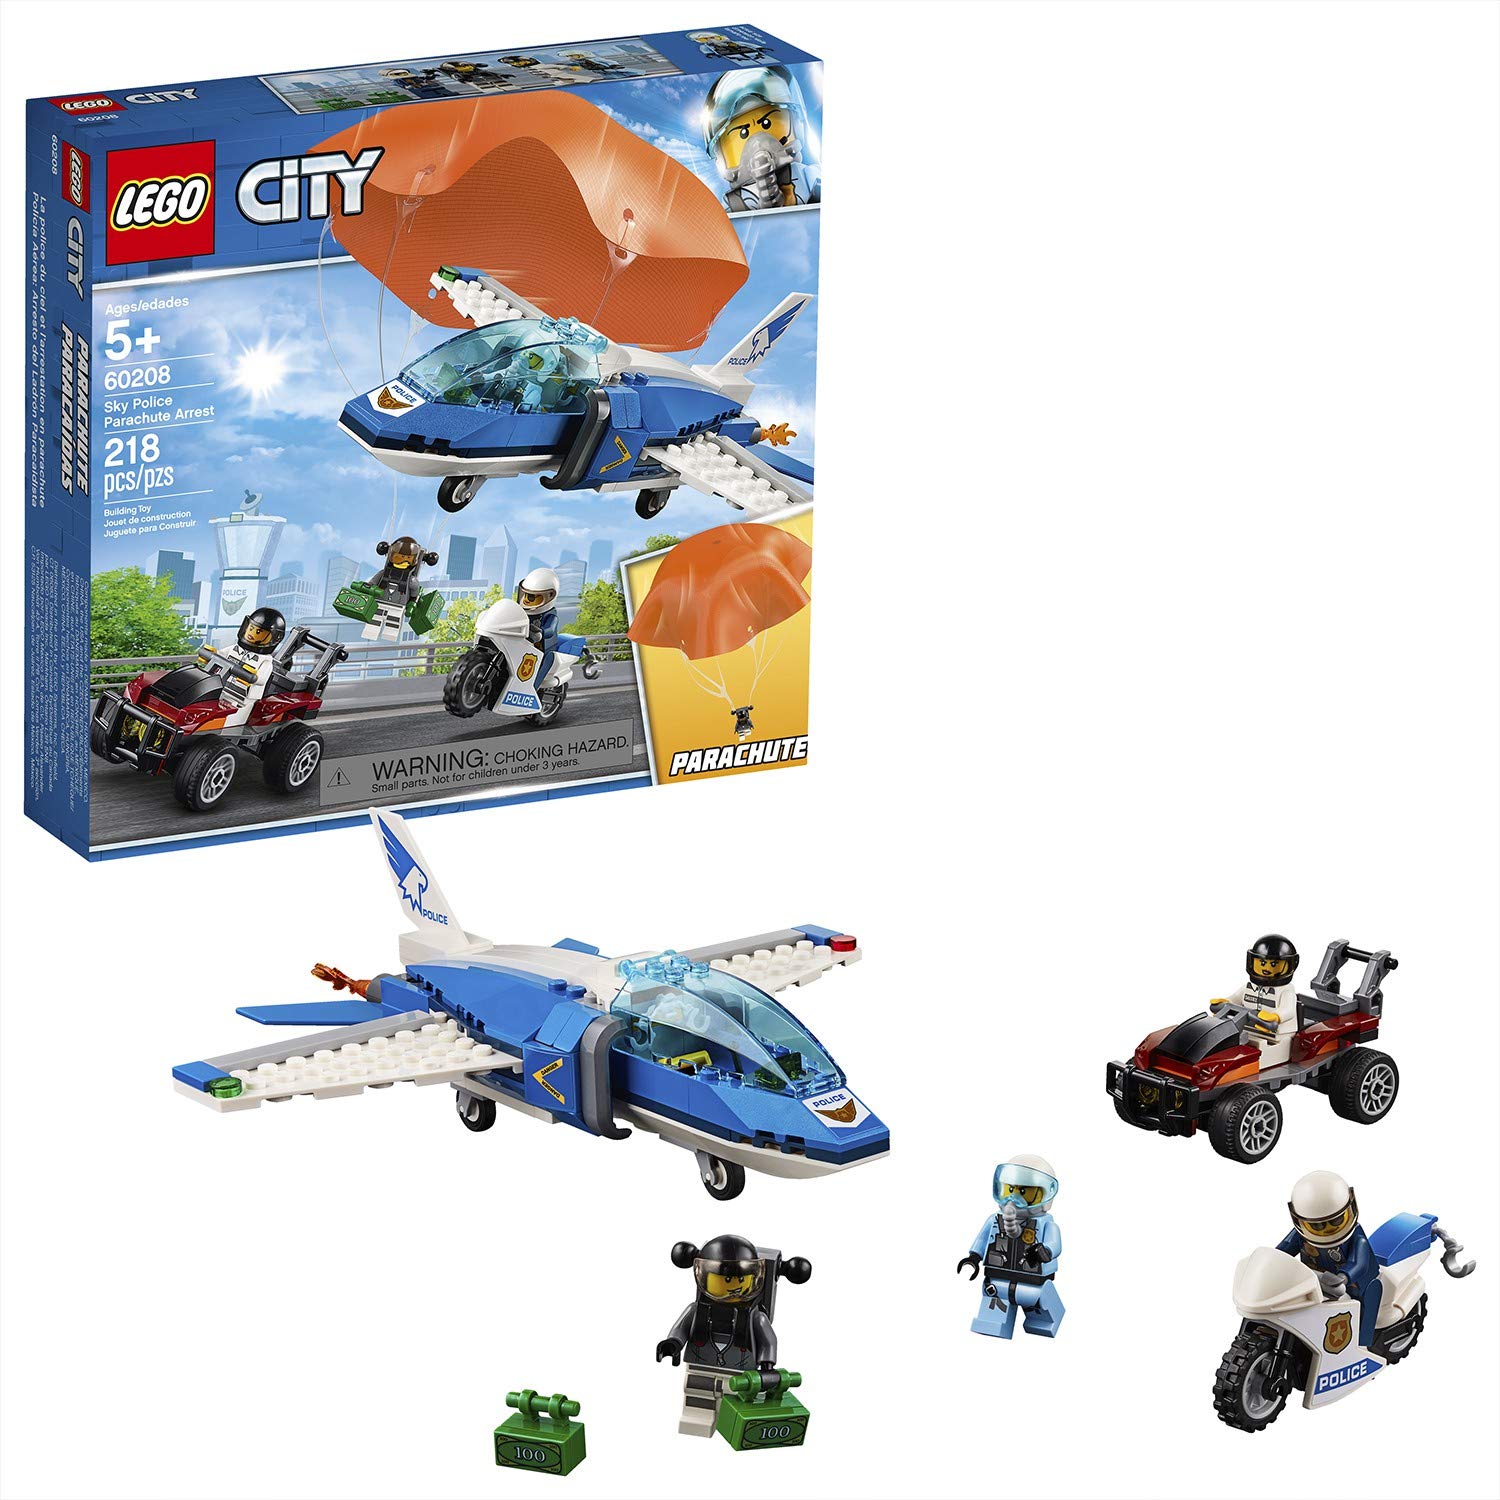 Lego 60208 City Police Escape With Parachute, Multi-Coloured